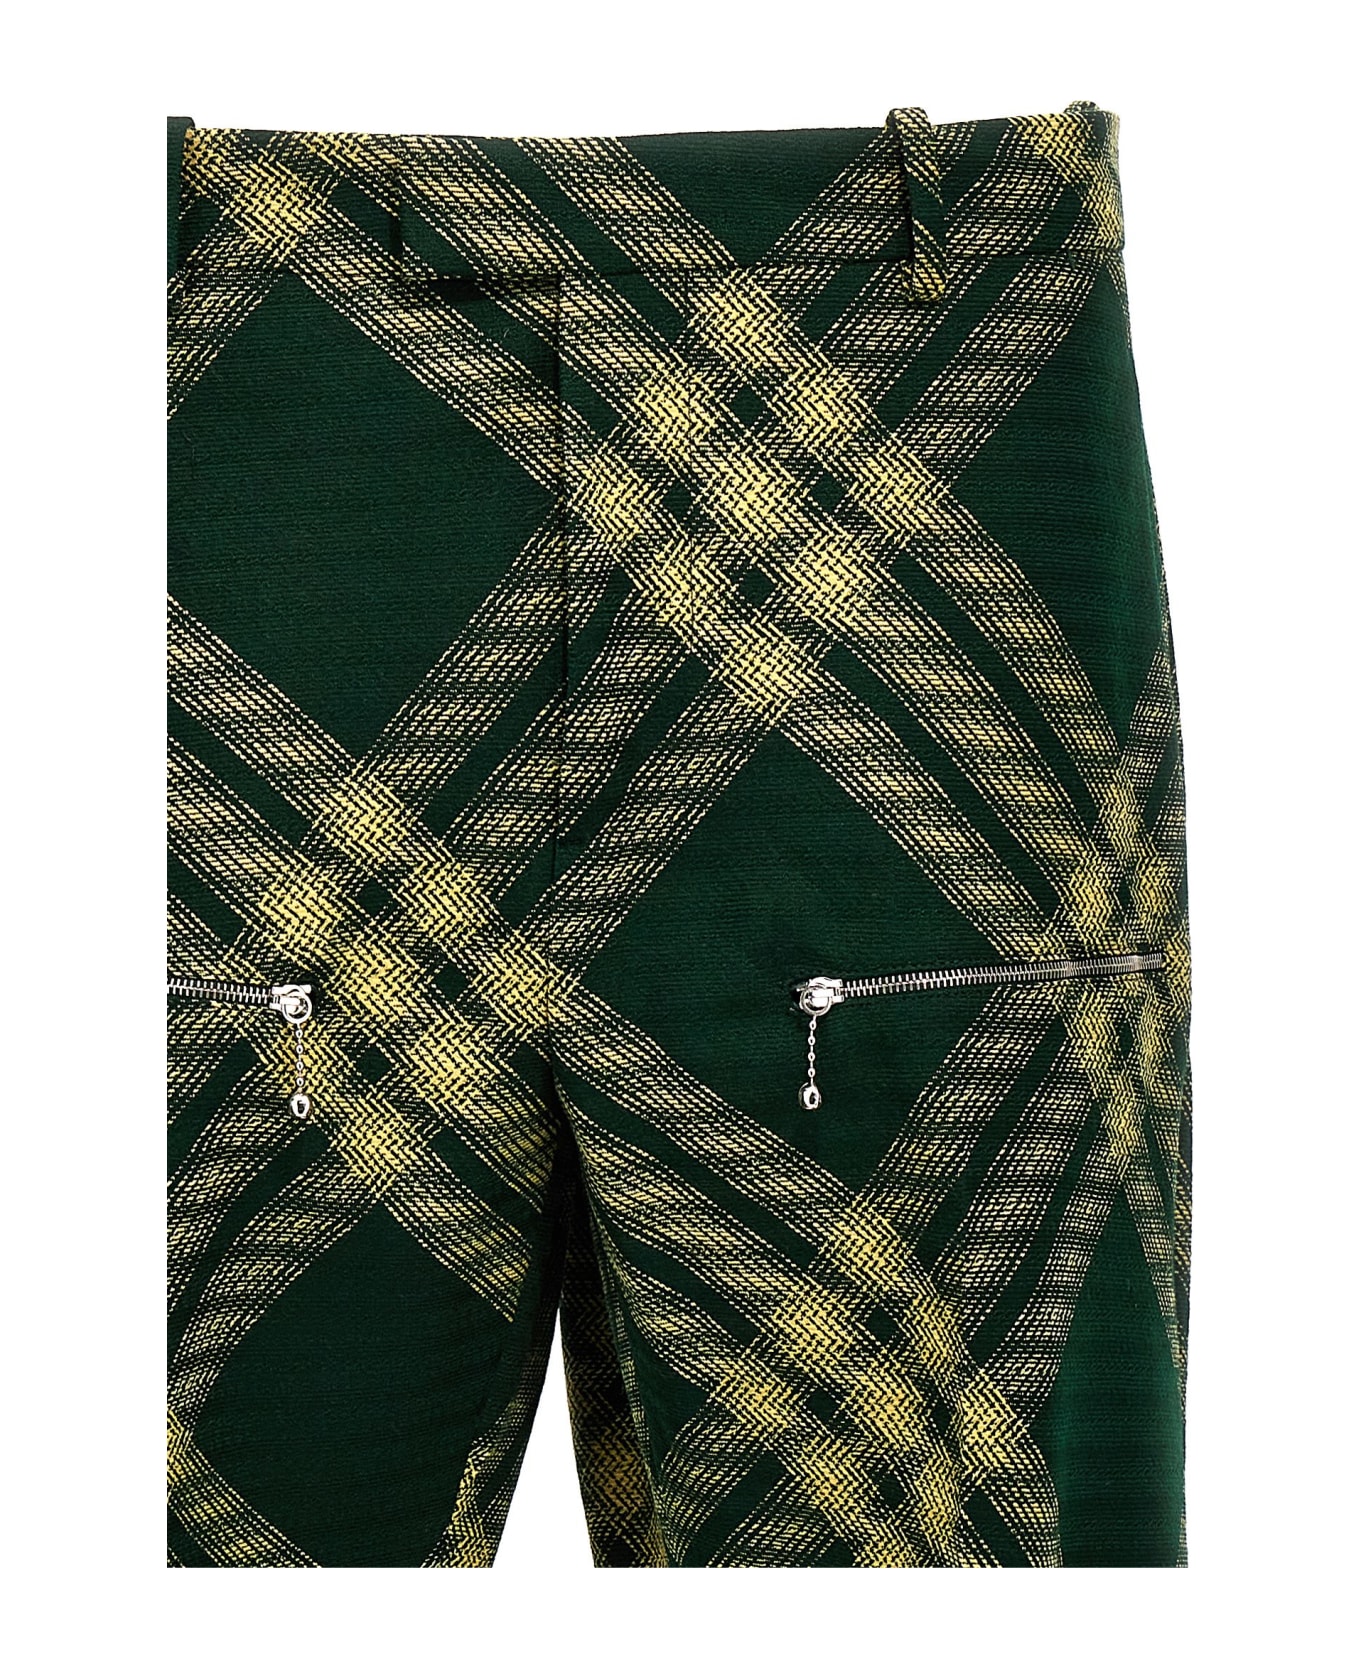 Burberry Check Wool Pants - Green